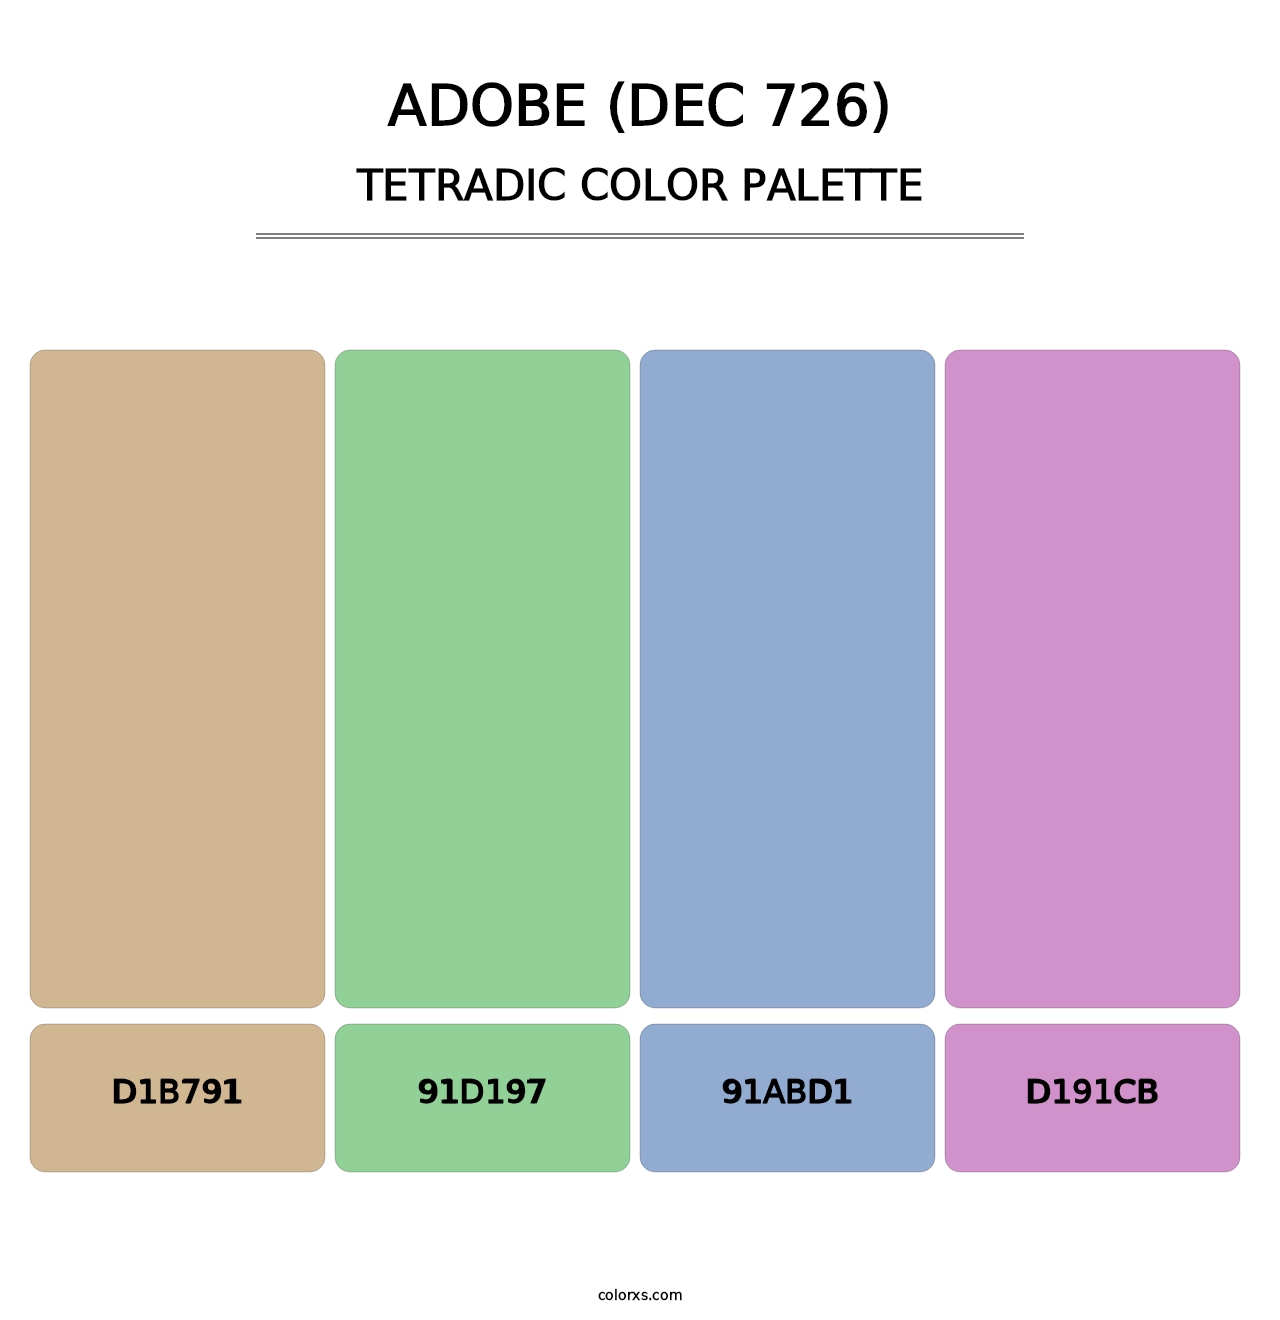 Adobe (DEC 726) - Tetradic Color Palette